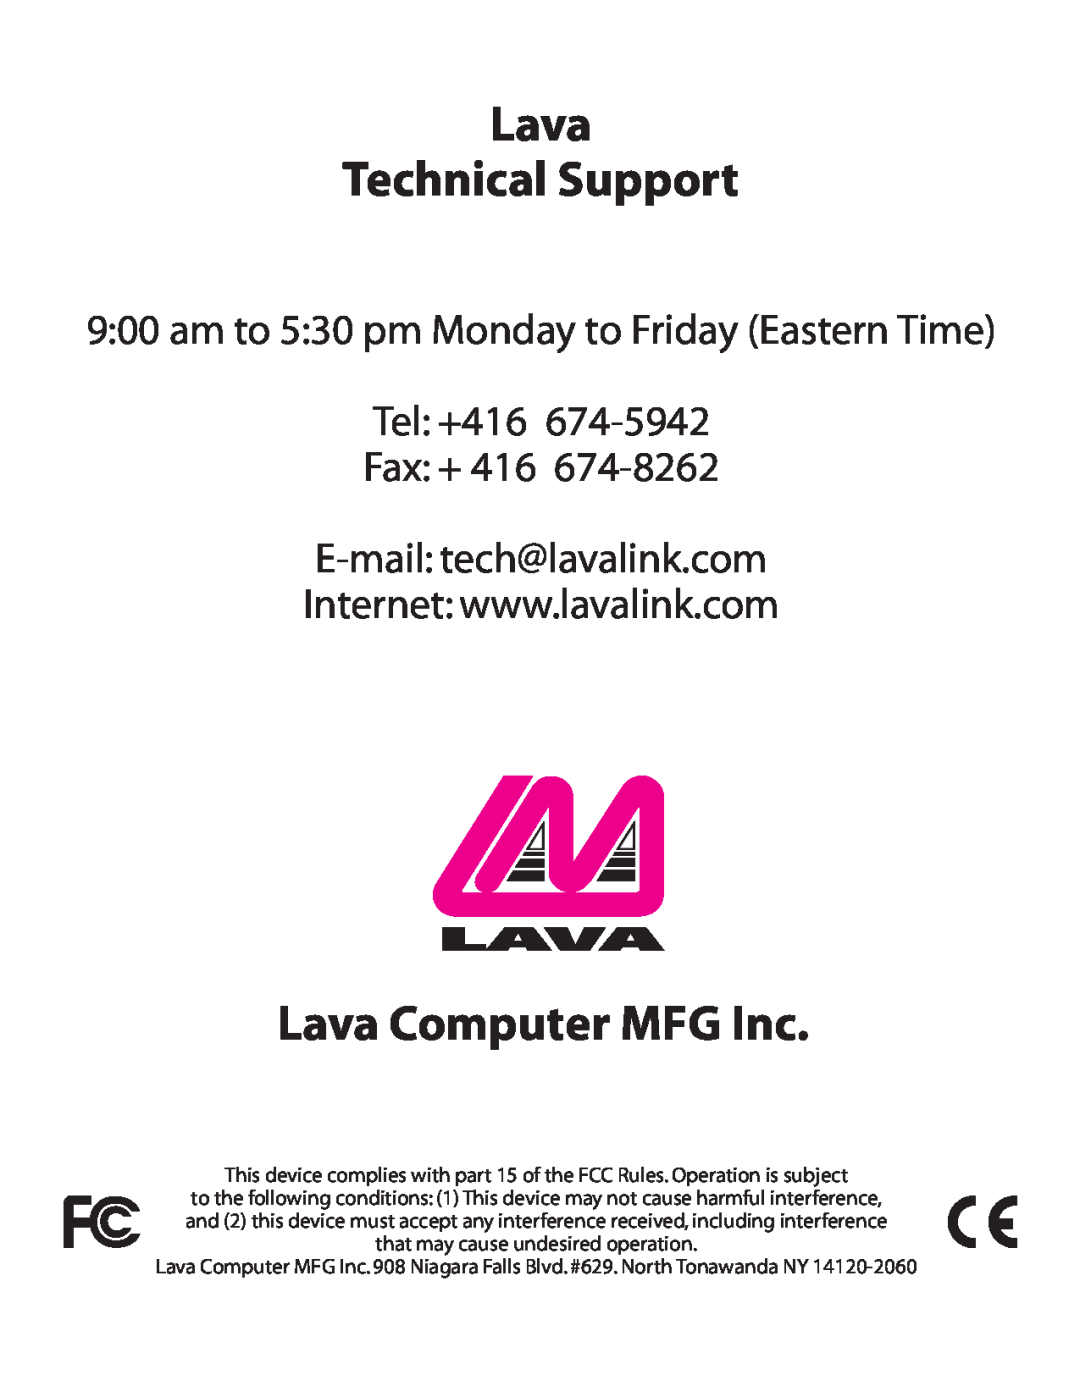 Lava Computer RS550 installation manual Lava Technical Support, Lava Computer MFG Inc, E-mail tech@lavalink.com 